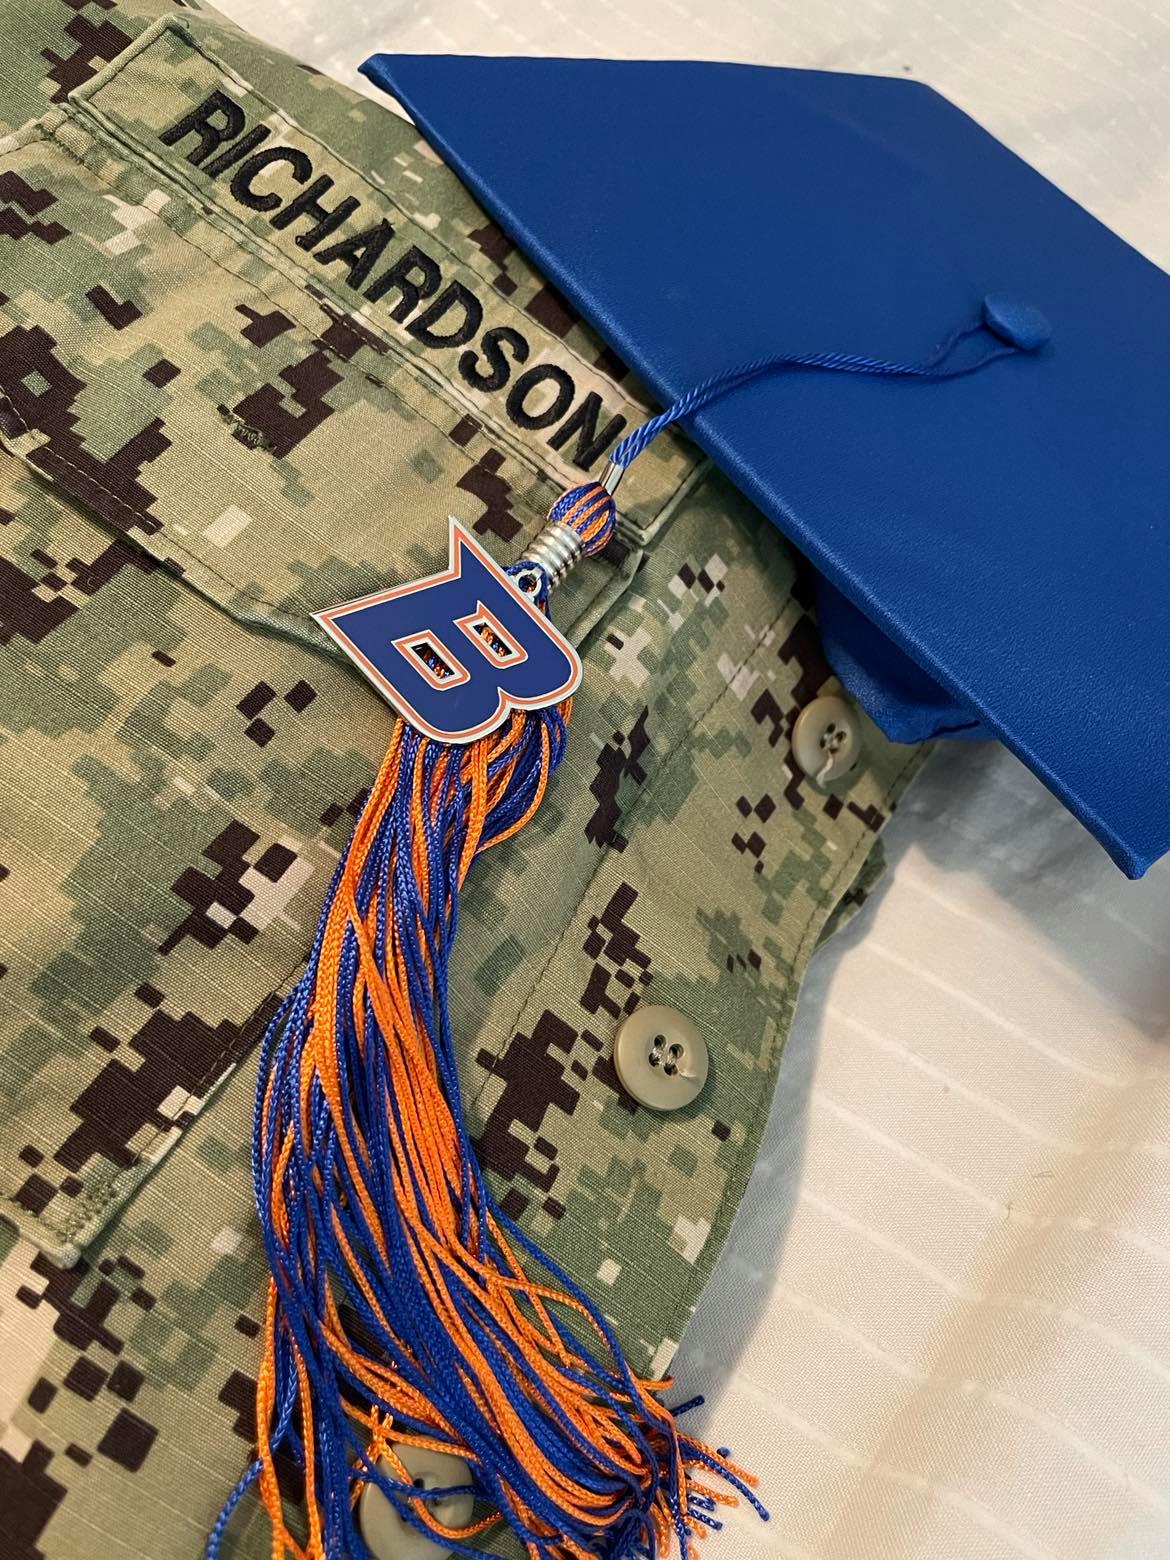 Austin Richardson's Naval uniform is pictured with his Boise State graduation cap. 